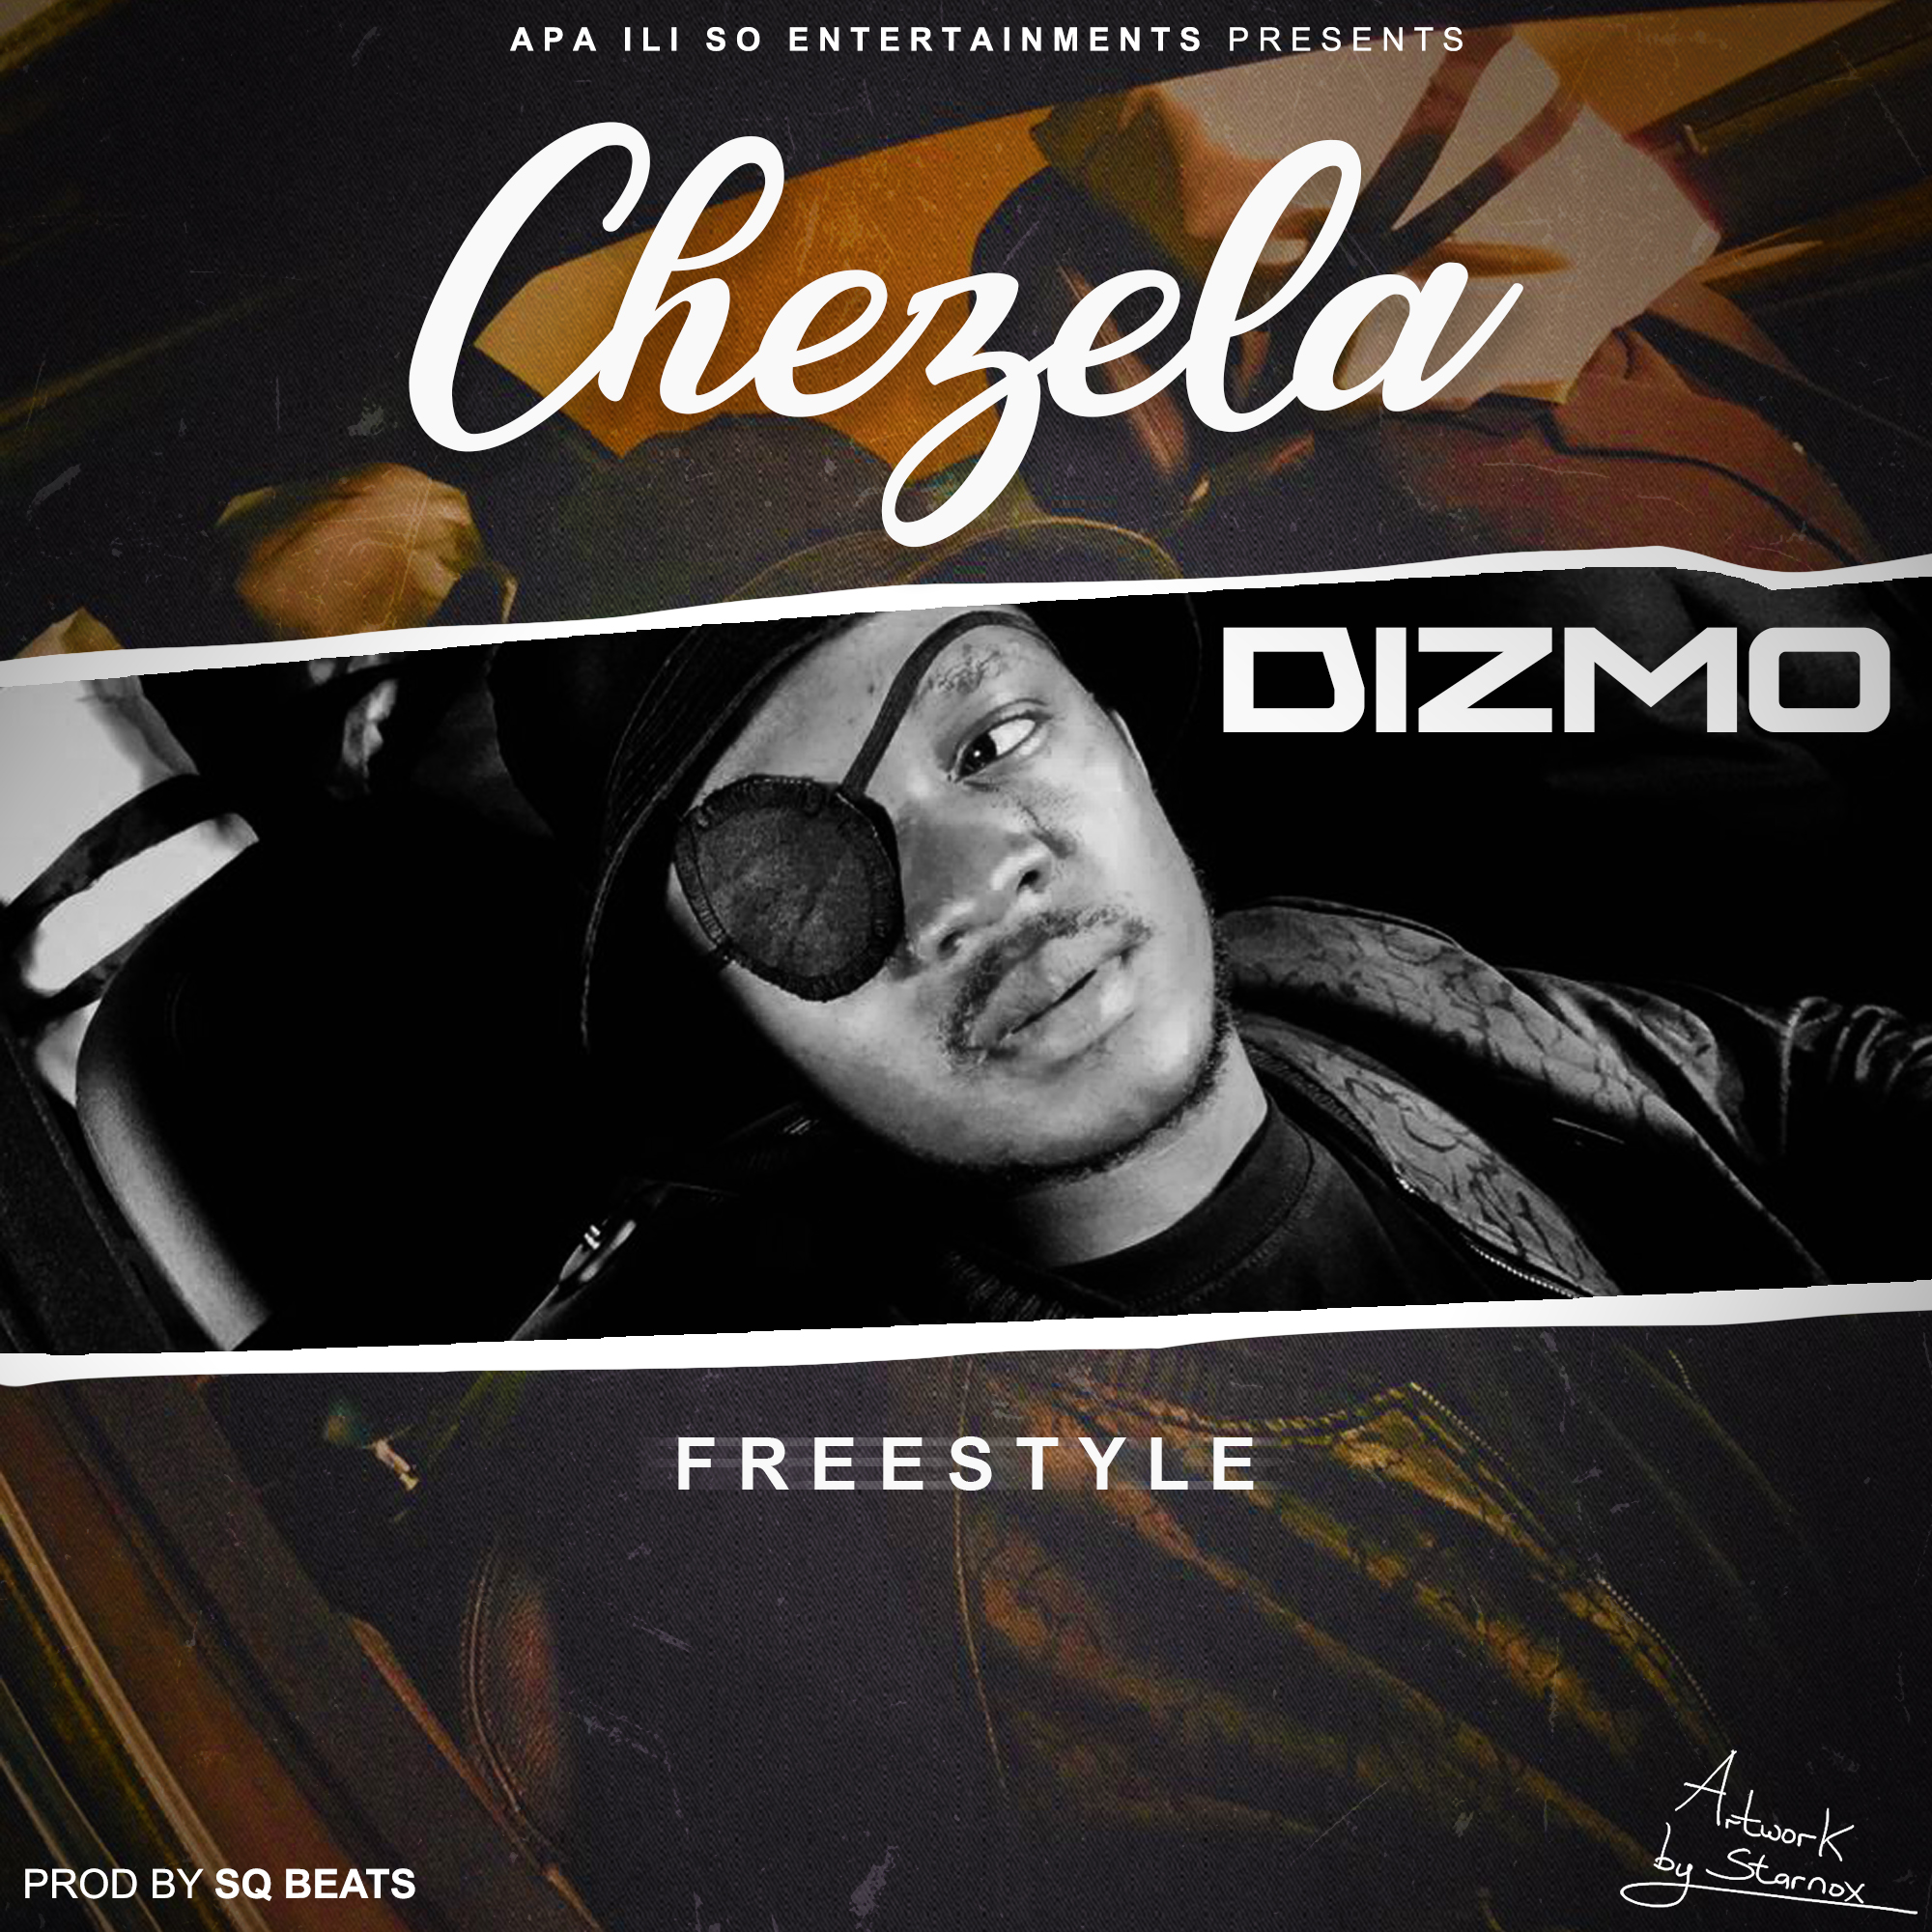 Dizmo - Chezela (Freestyle) Mp3 Download